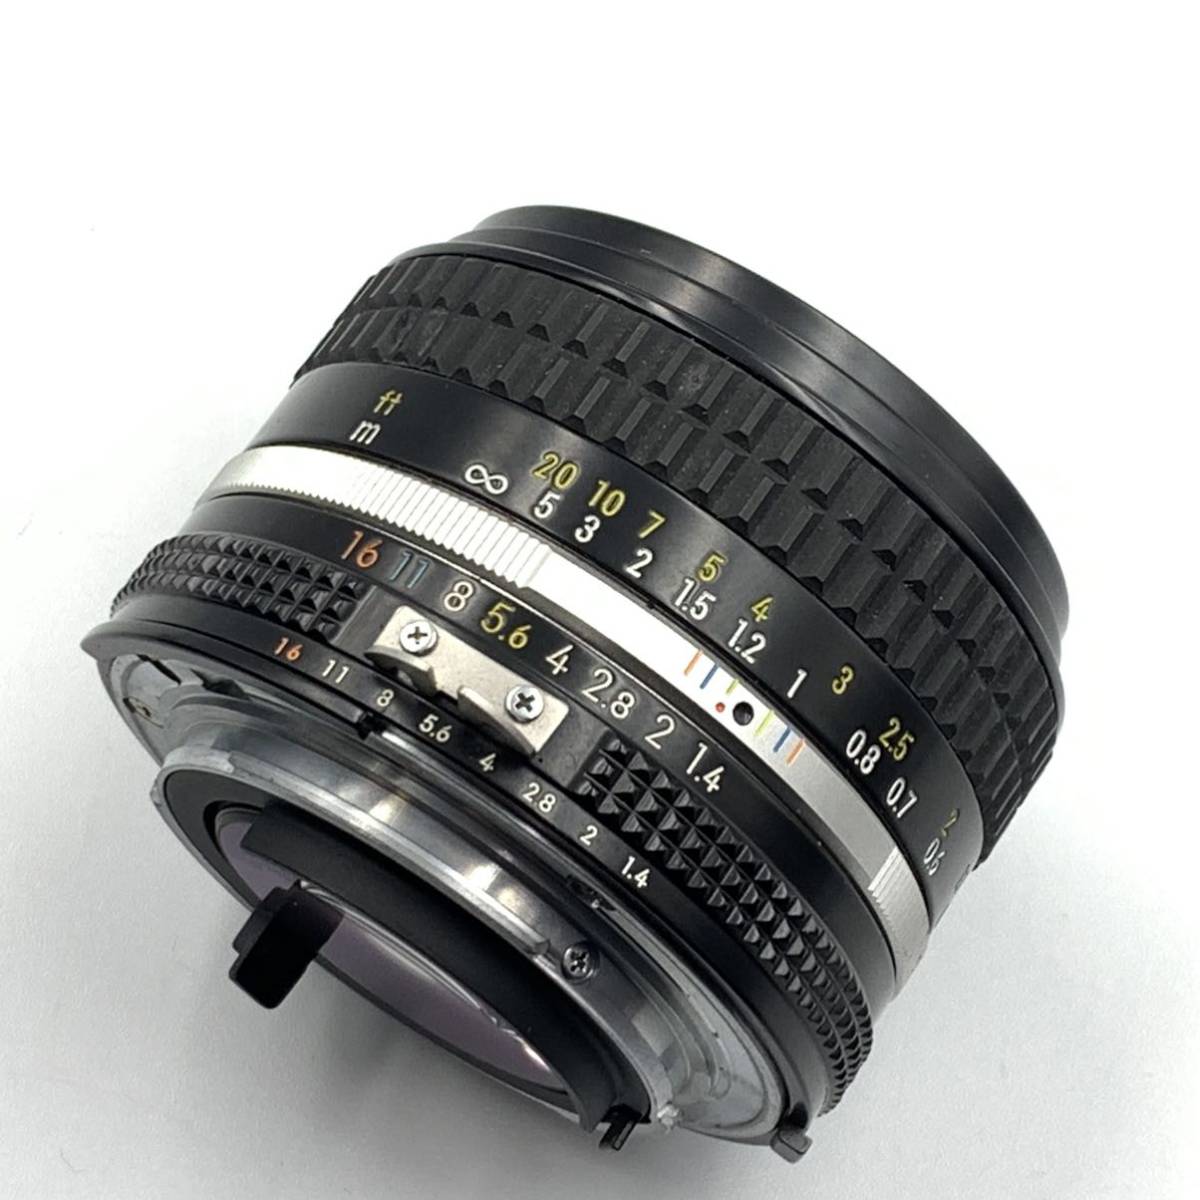 Nikon FE2 ブラック + Nikkor 50mm F1.4 Ais_画像2